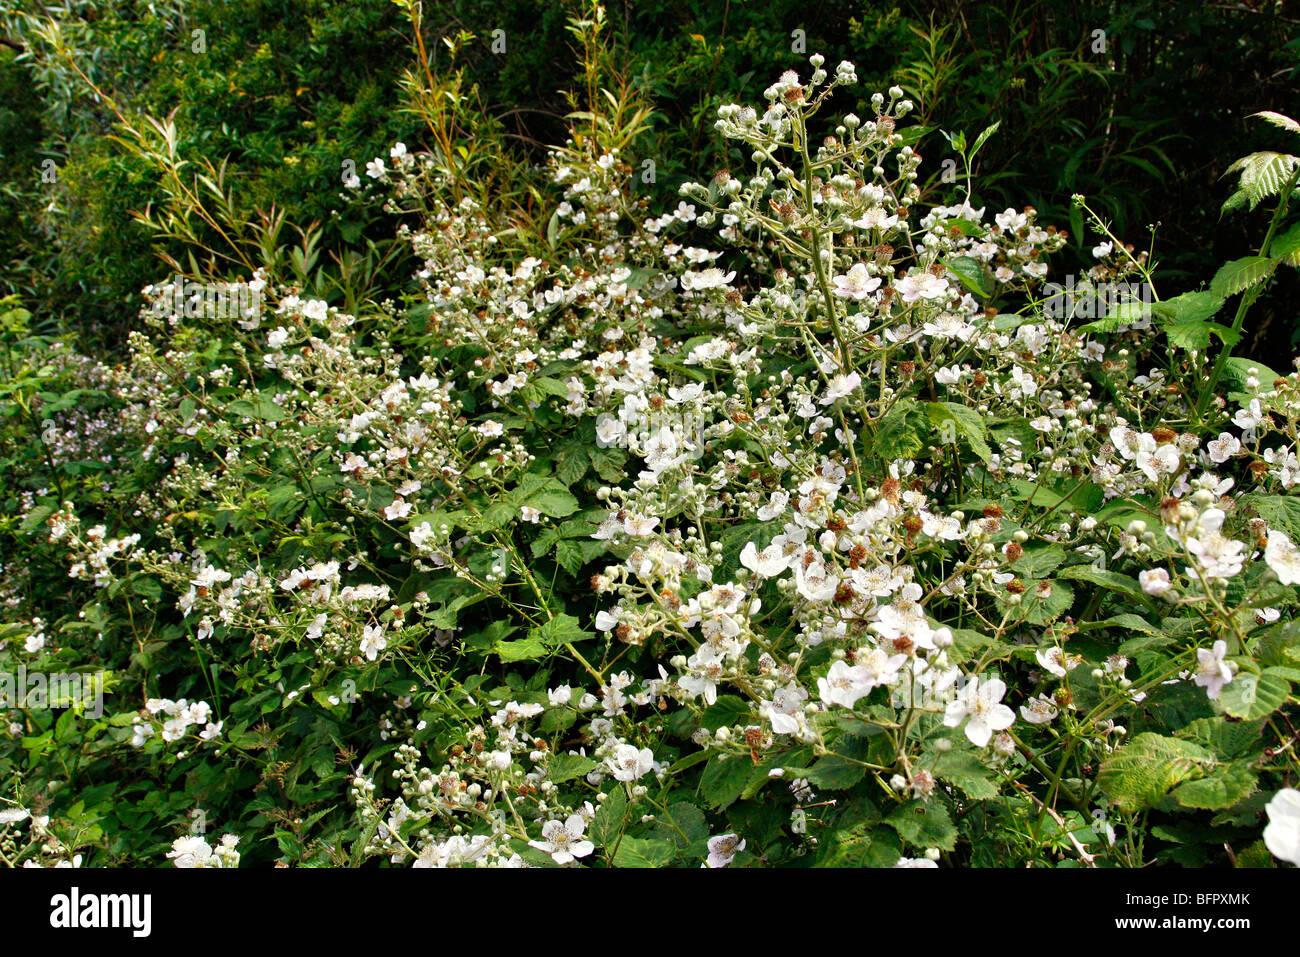 Rubus fruticosus - wild Blackberry plants in flower Stock Photo